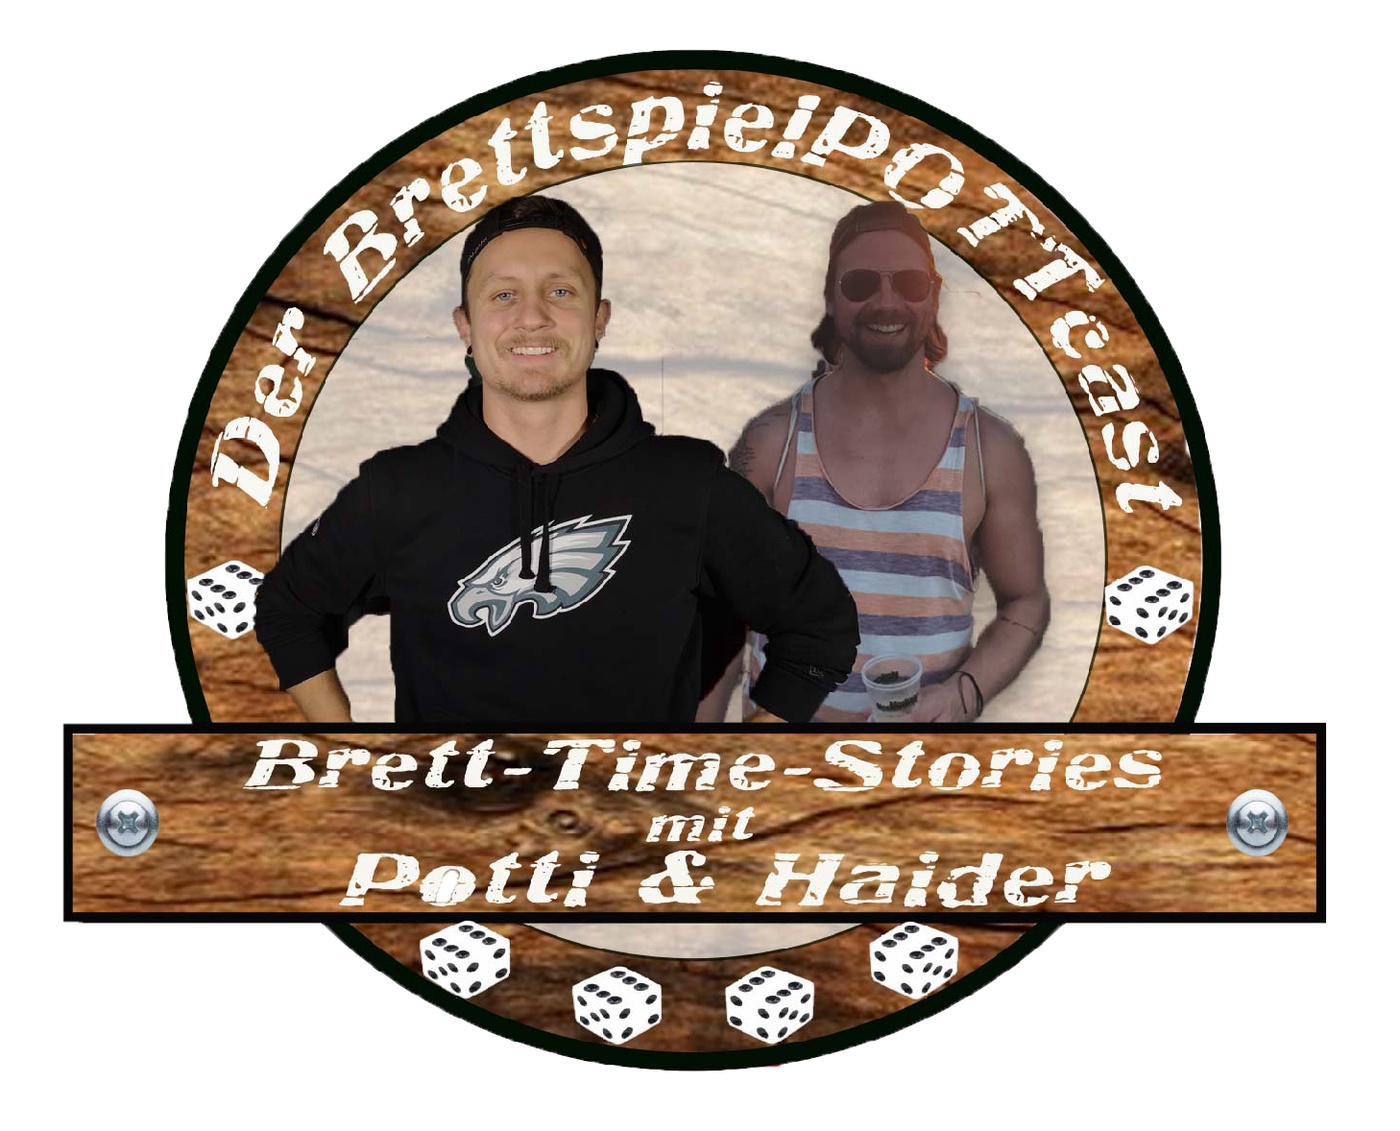 Brett-Time-Stories - Der Brettspiele POTTcast